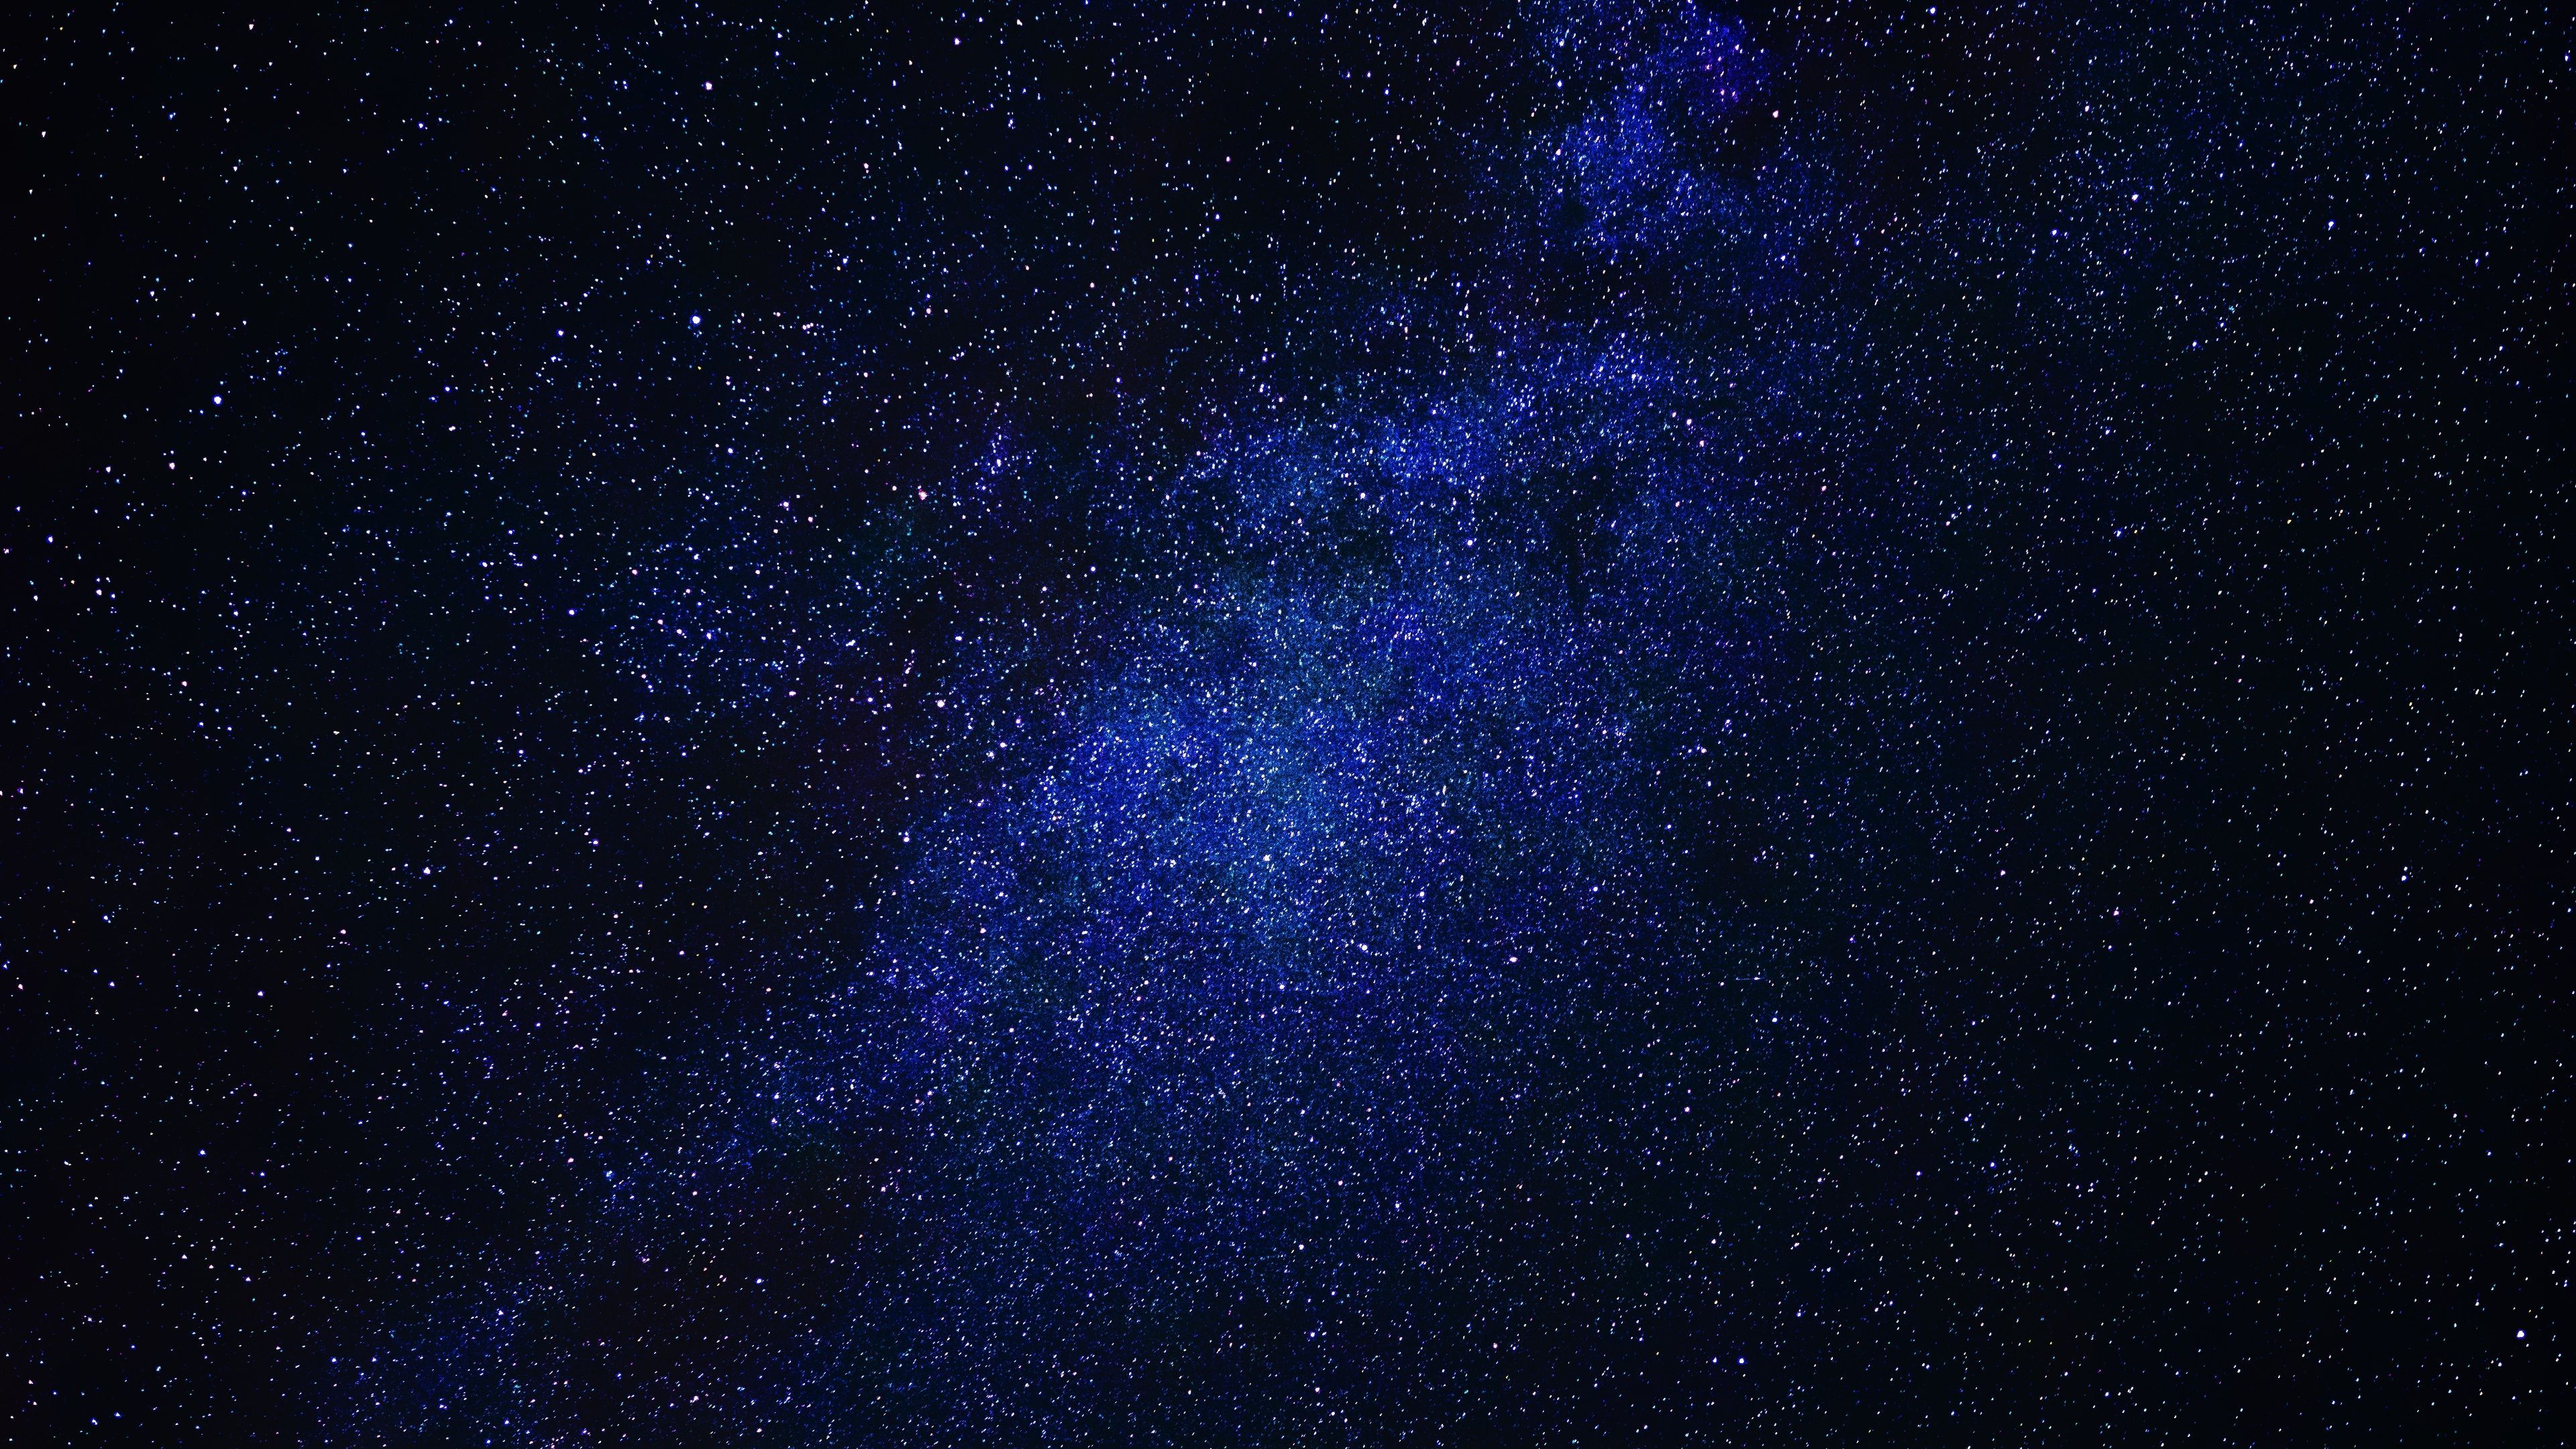 Milky Way 4k universe wallpaper, stars .com